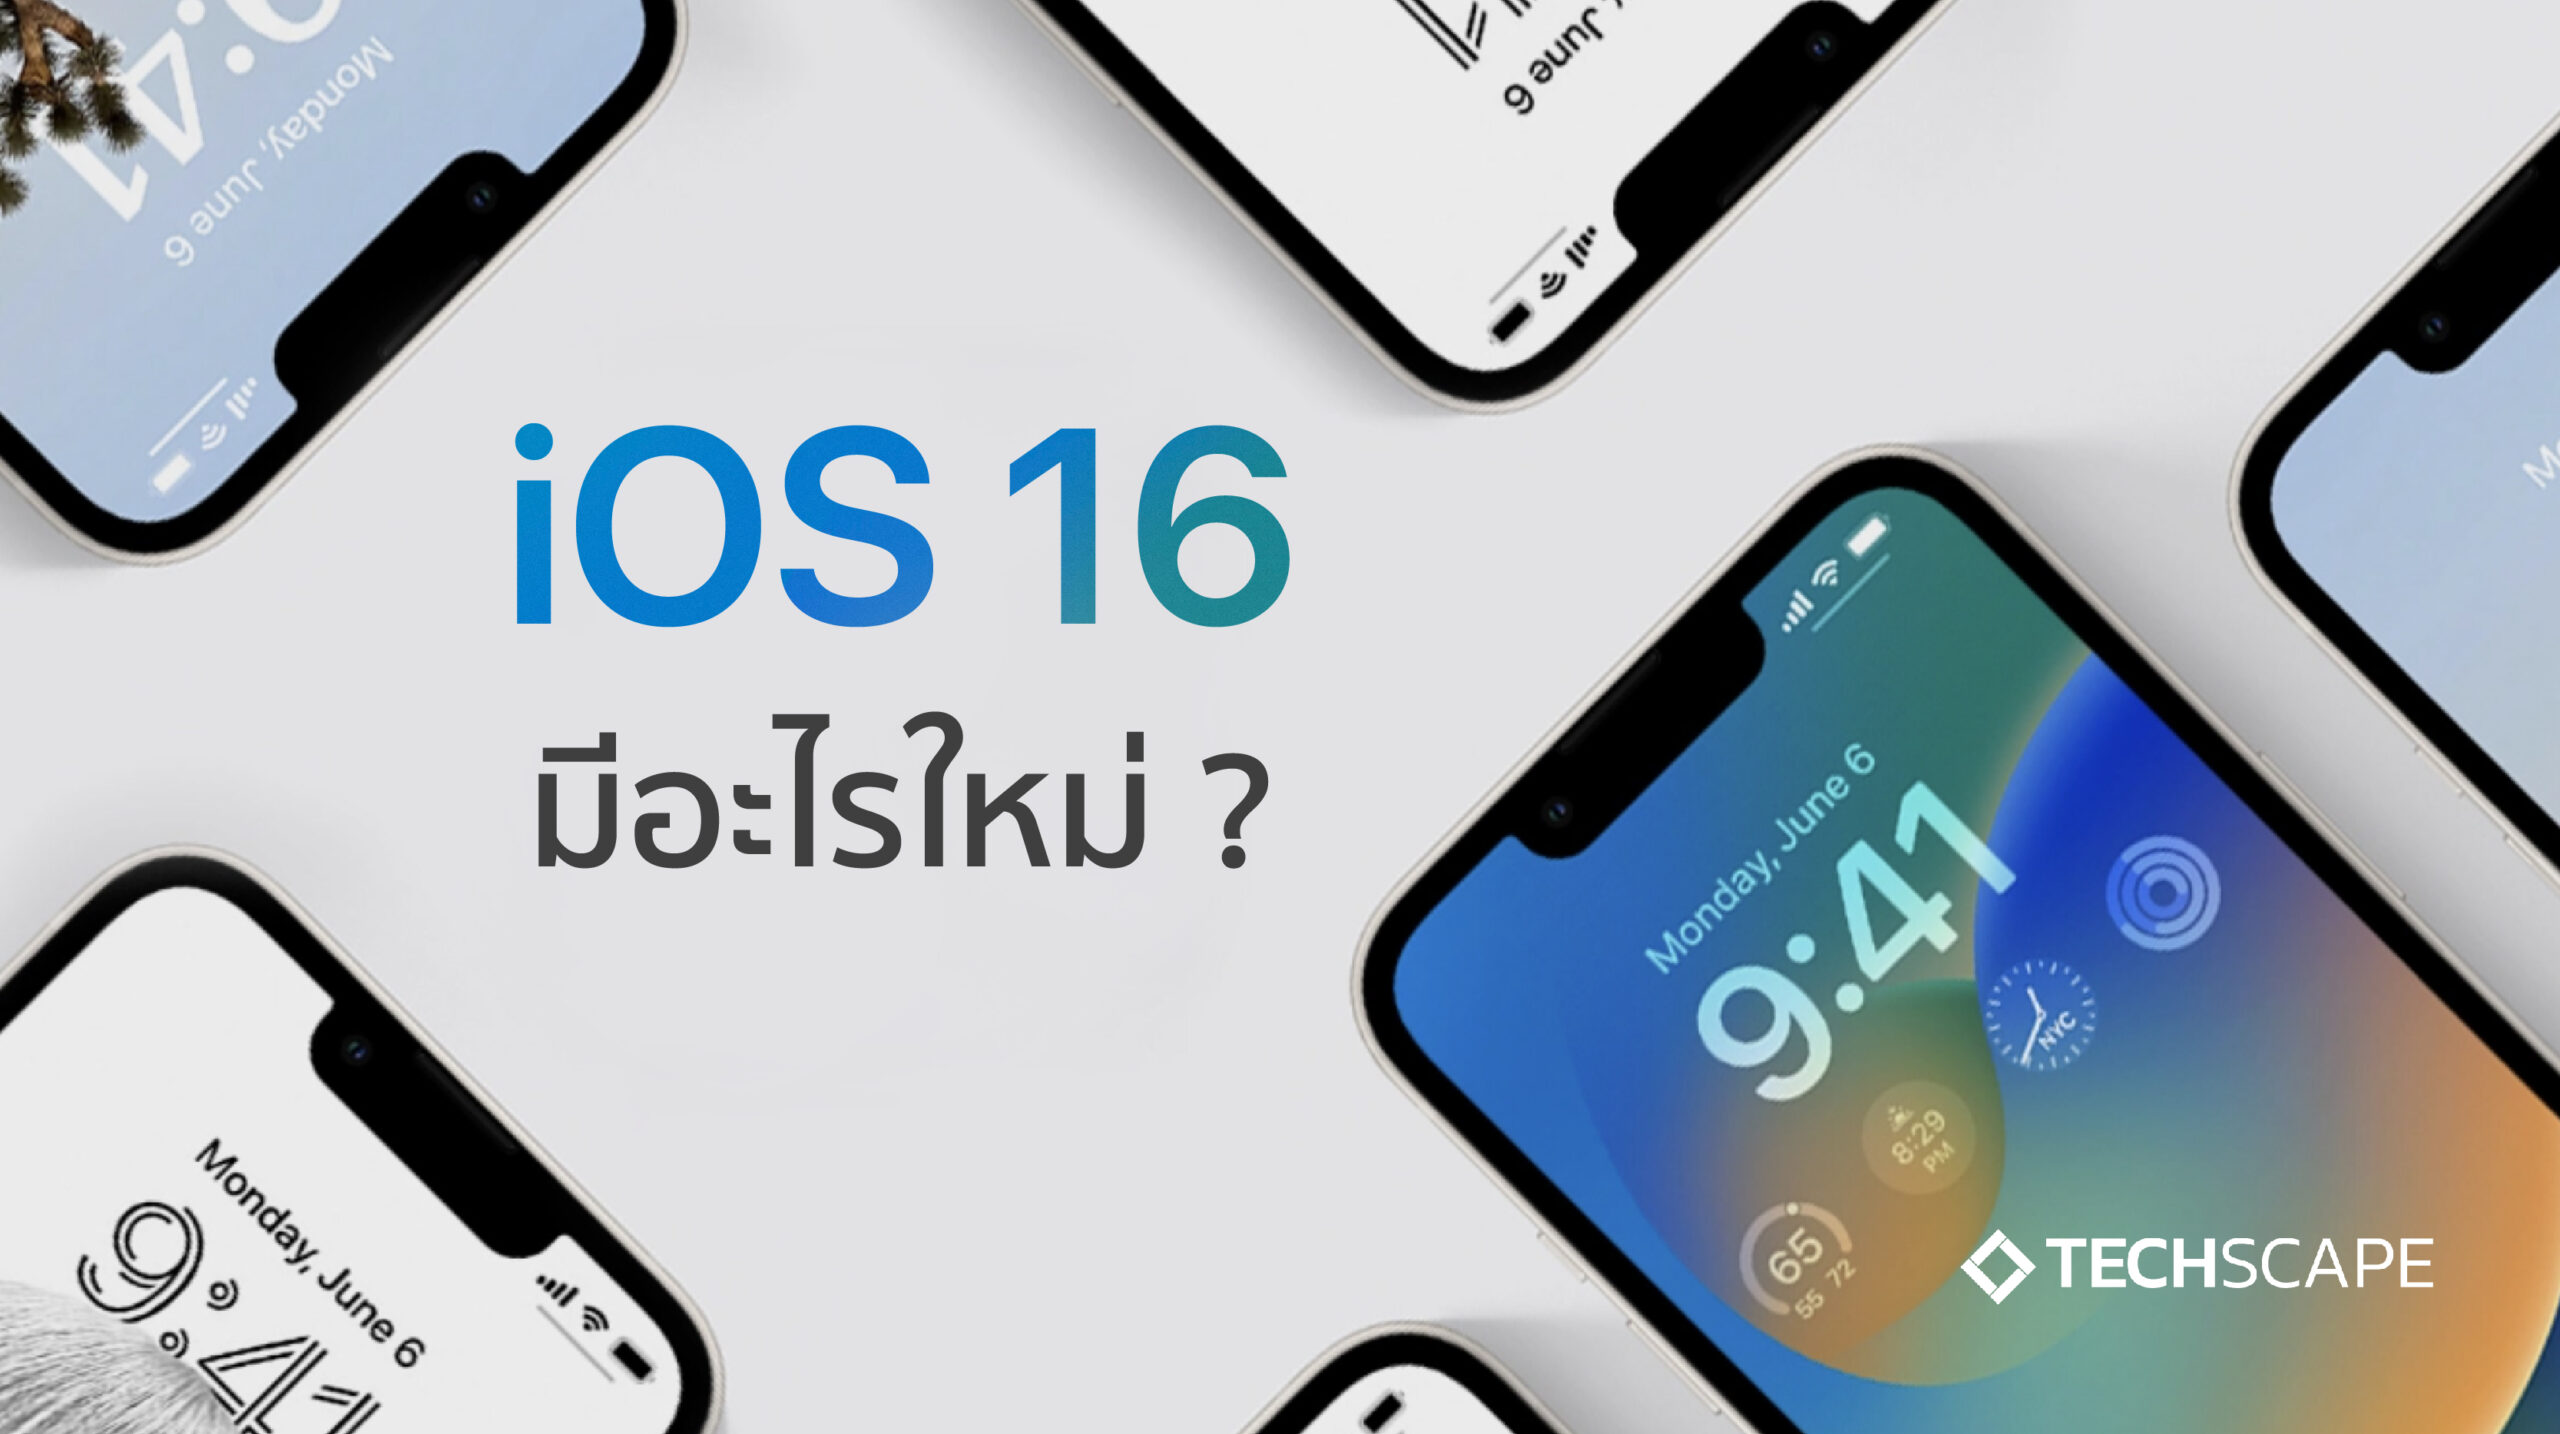 iOS16 Features